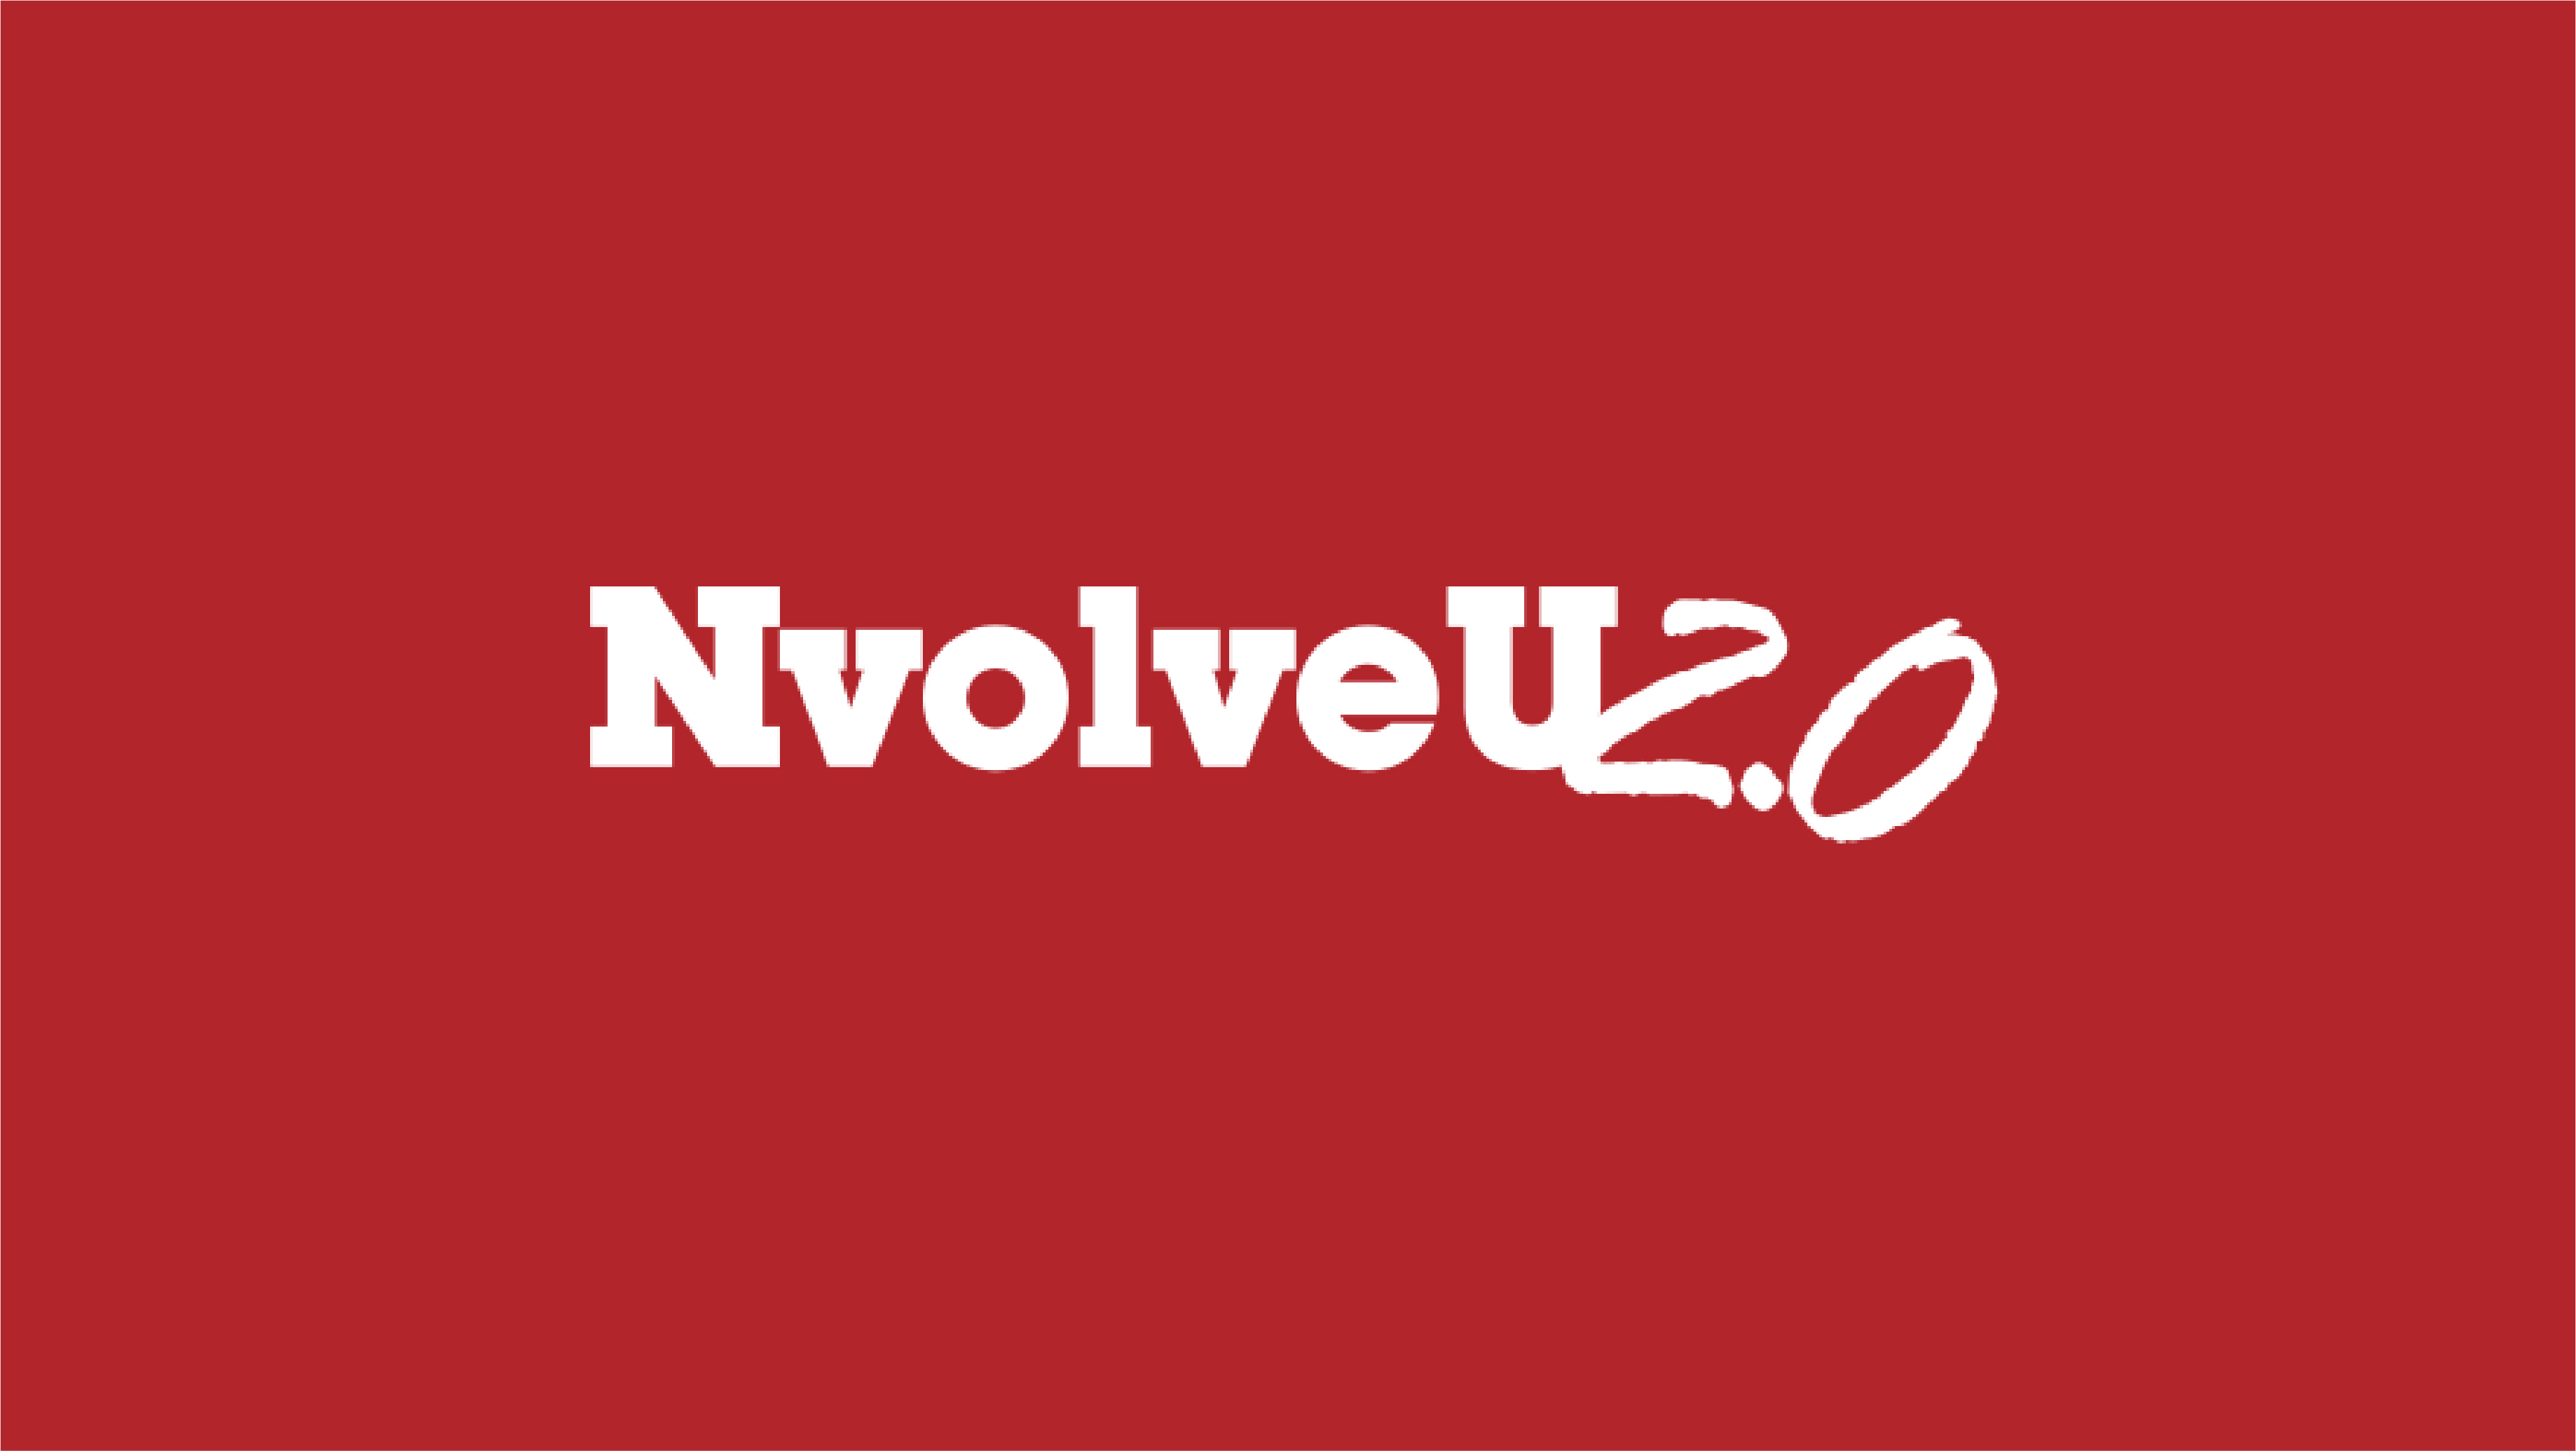 NvolveU 2.0 puts student organizations at your fingertips.